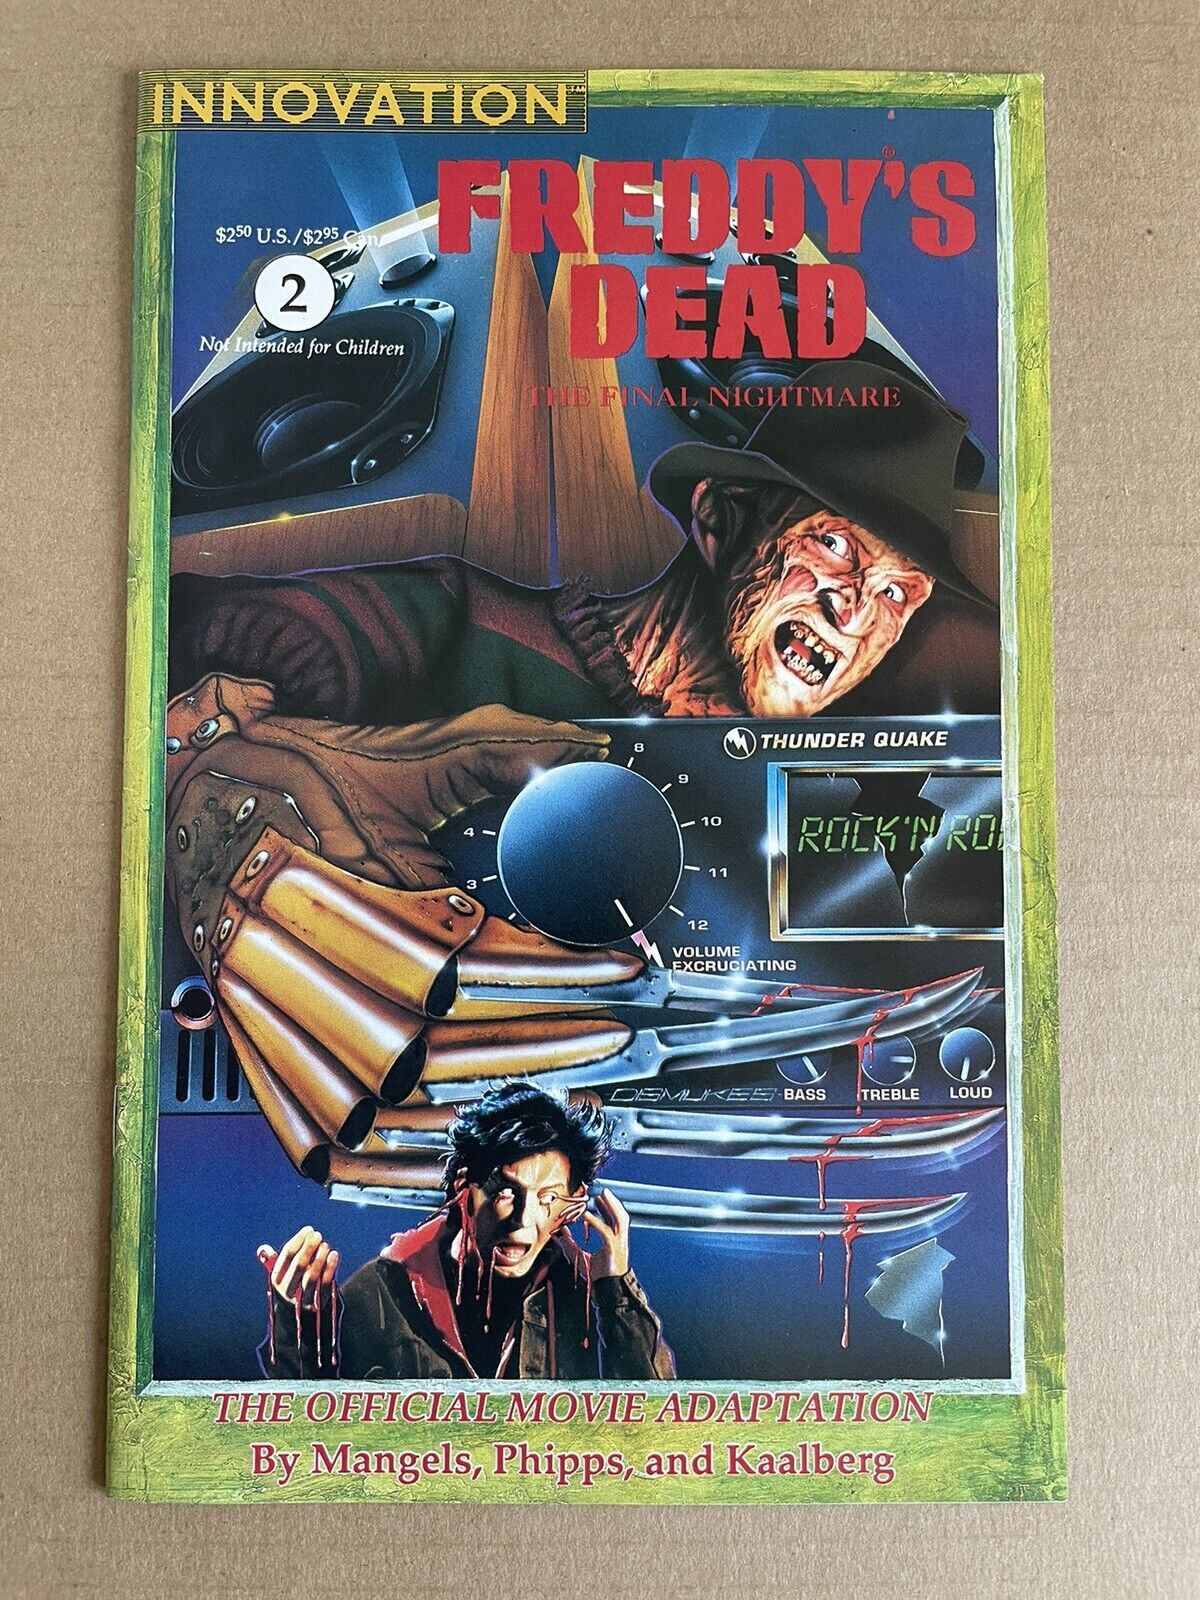 FREDDY'S DEAD: THE FINAL NIGHTMARE #2, INNOVATION COMICS, 1991